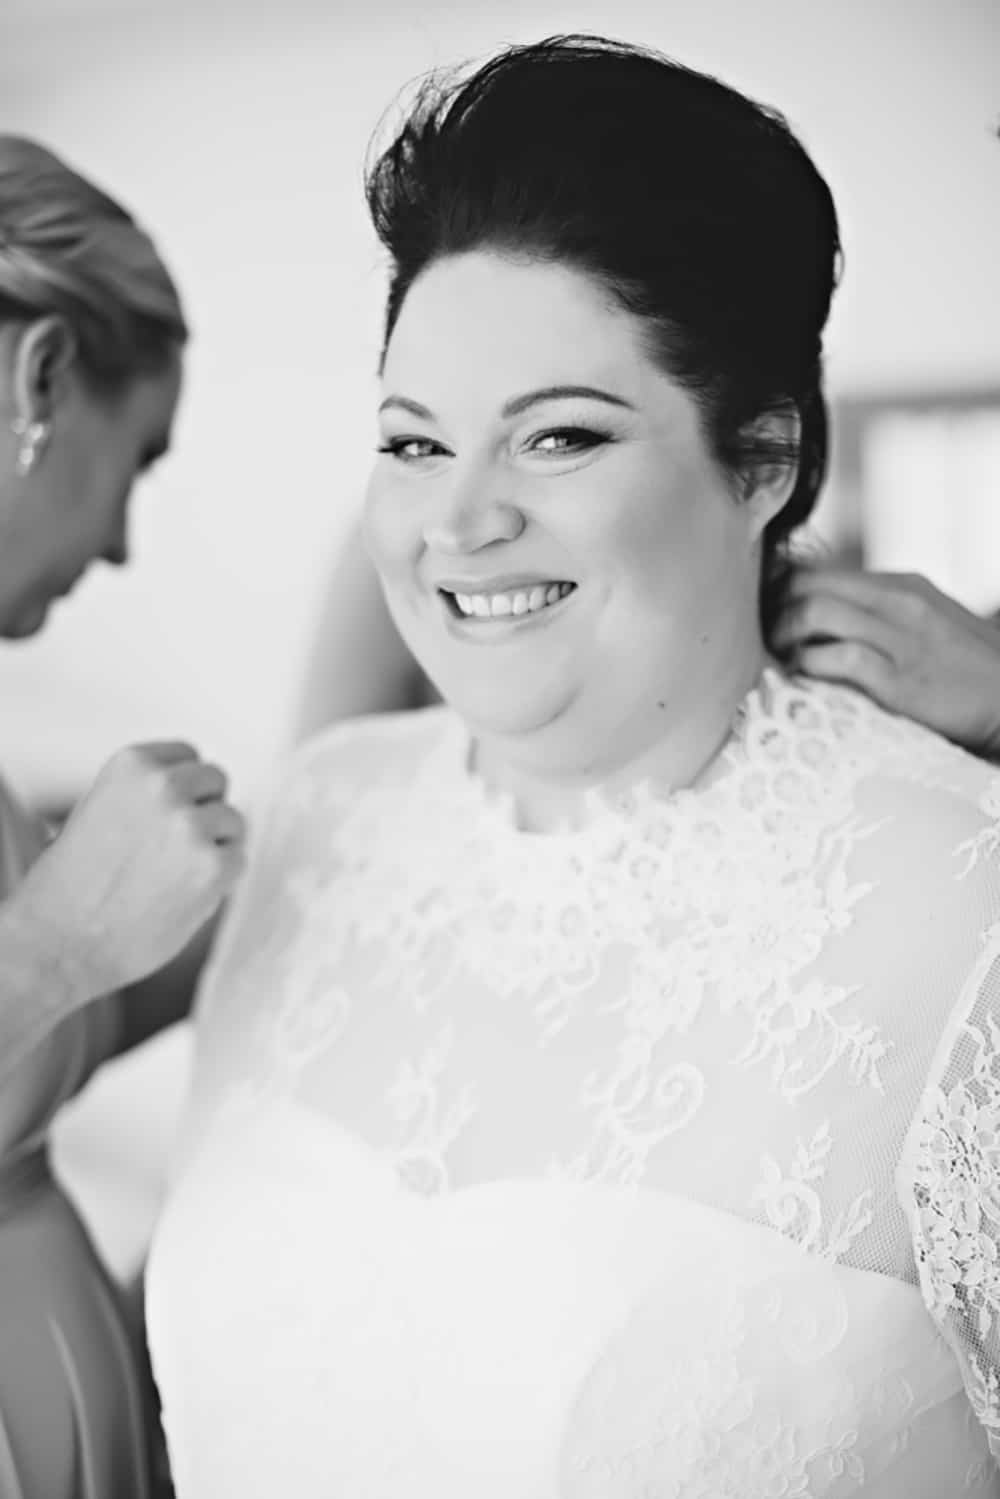 Queensland bride Amanda felt amazing in her plus-size wedding dress.